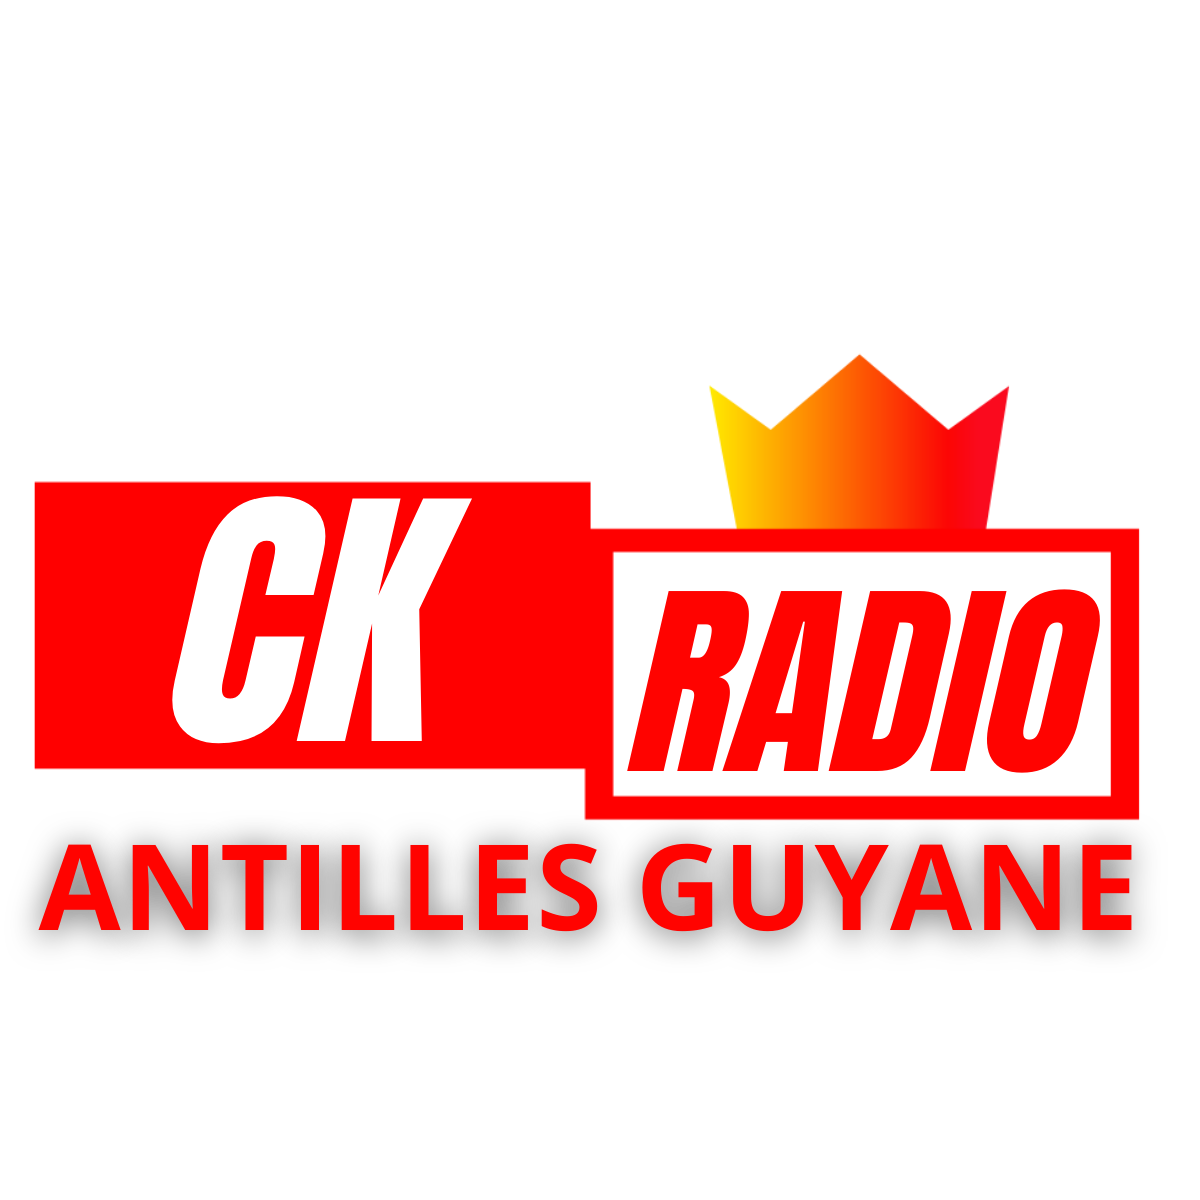 CK Antilles ok.png (98 KB)